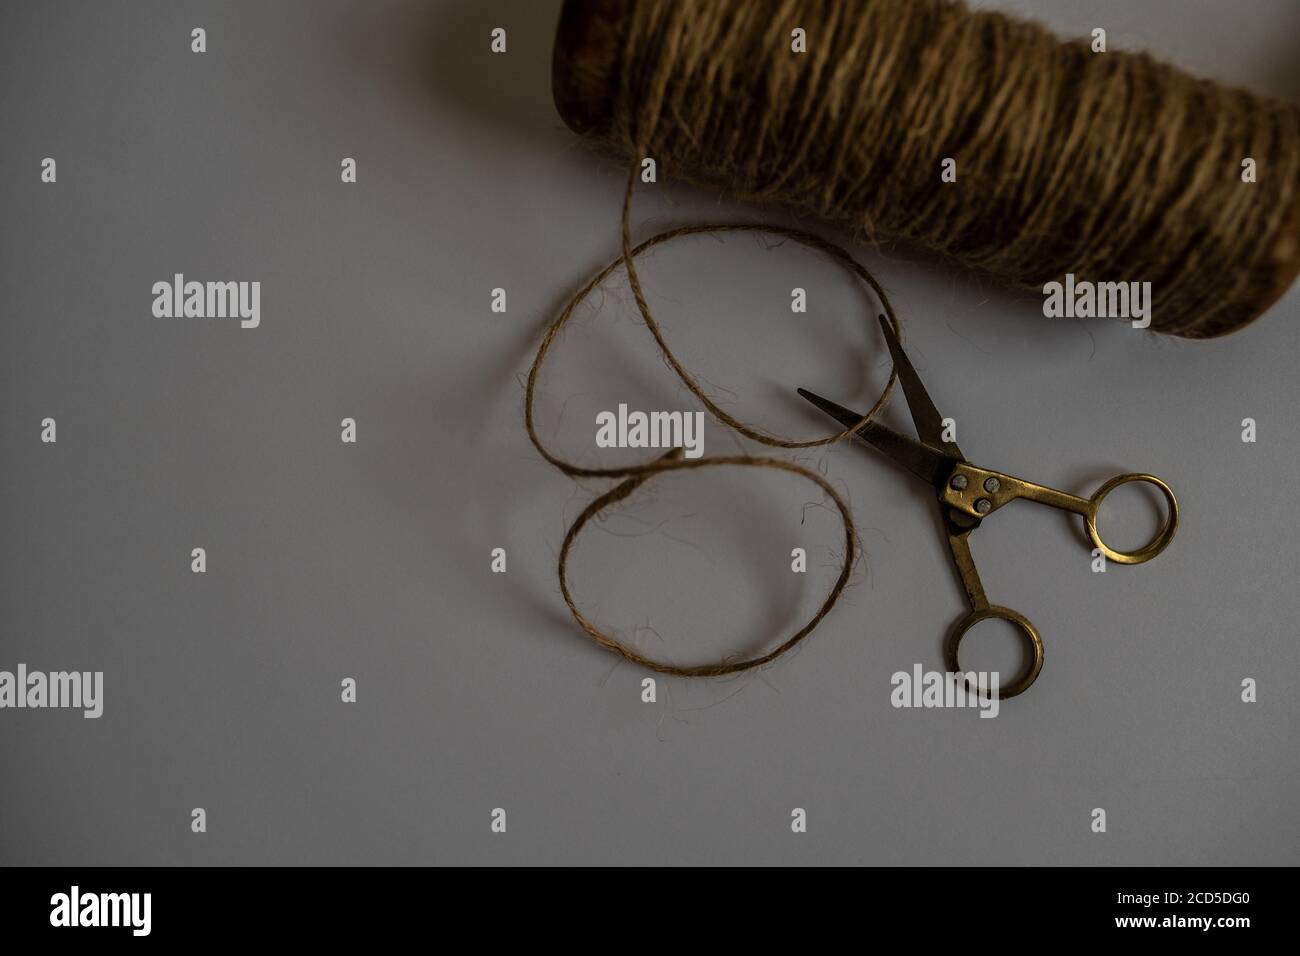 Spools of burlap threads or jute twine on white Stock Photo - Alamy